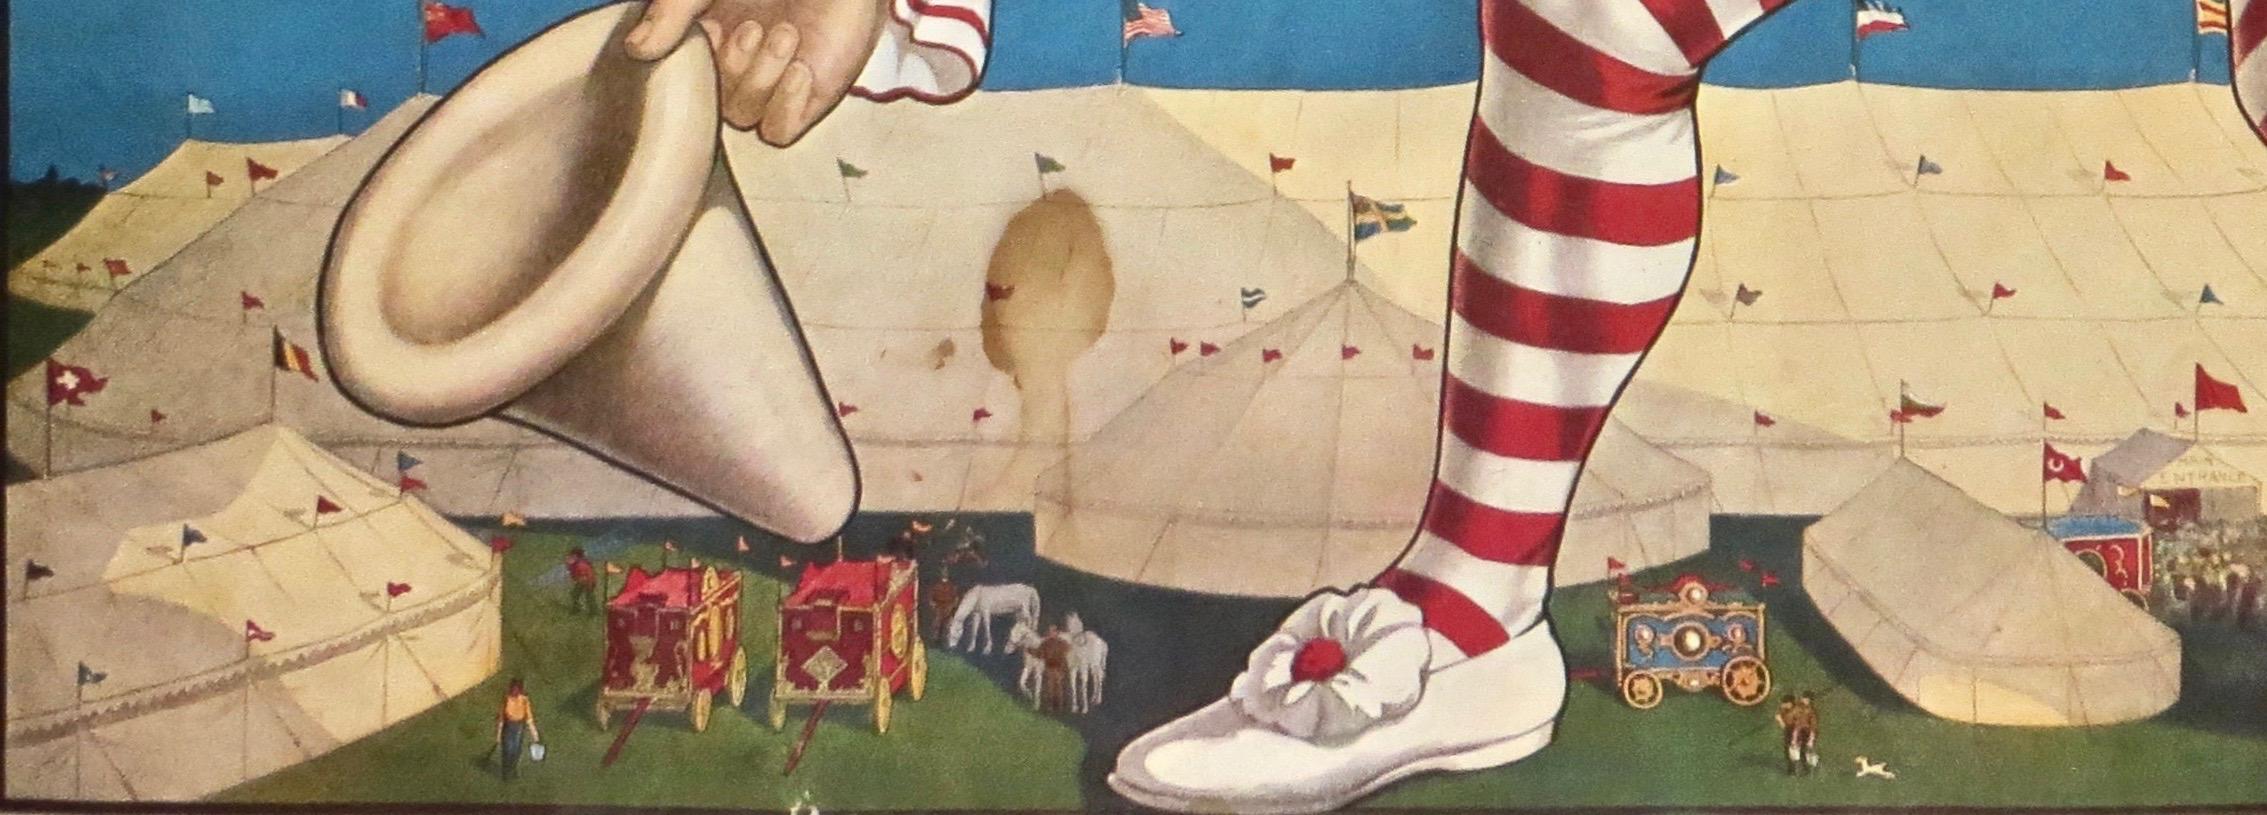 Artisanat Affiche du cirque de Ringling Bros., vers 1971. 